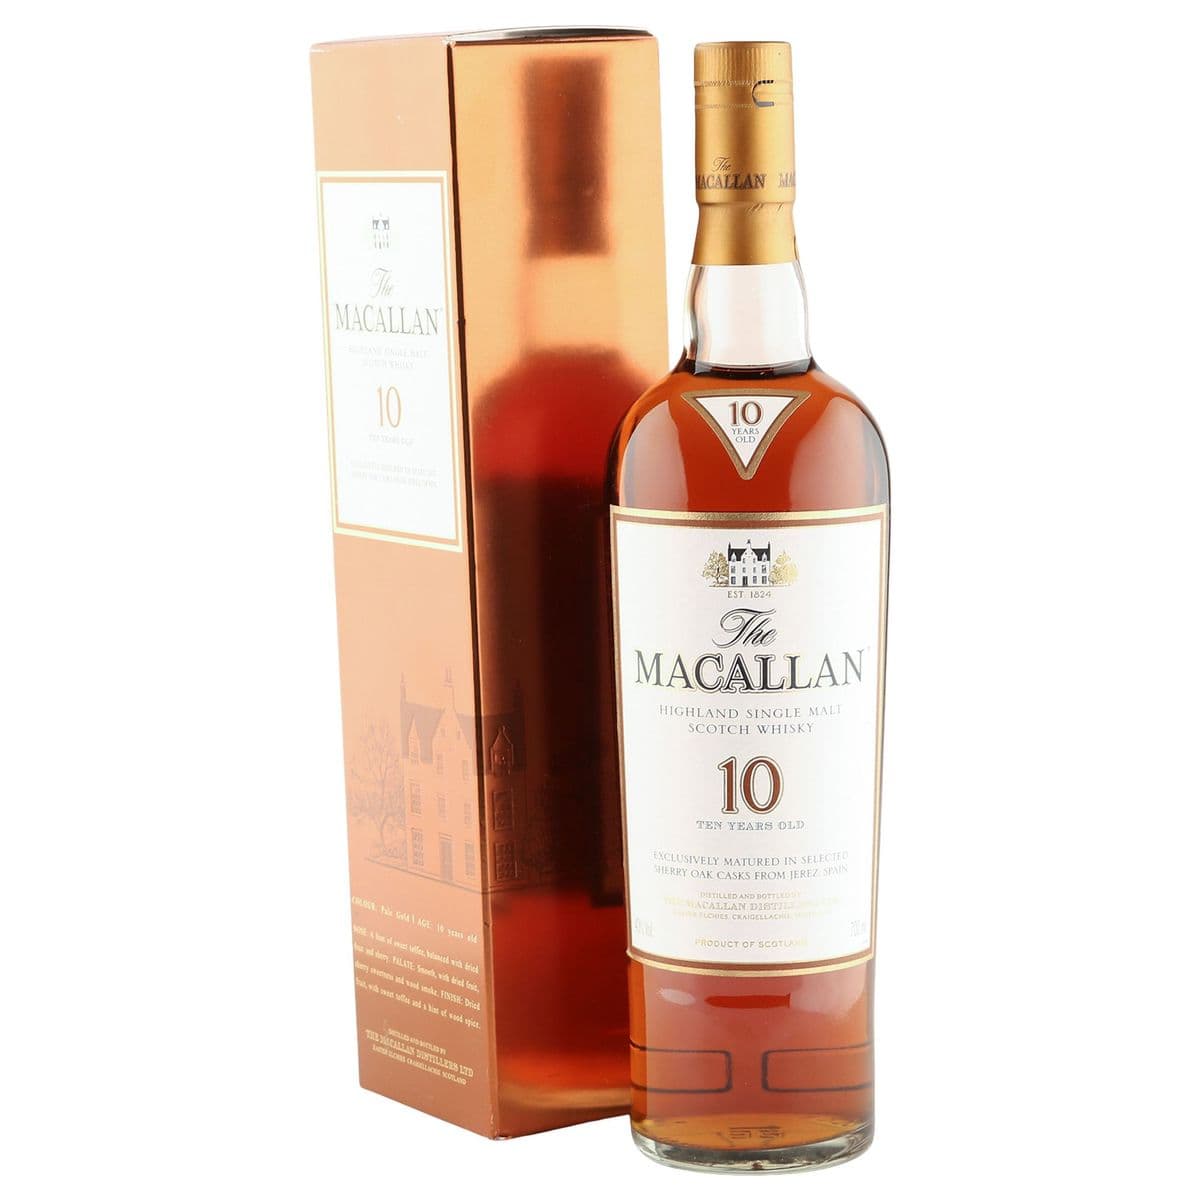 Macallan 10 year old Sherry Oak whisky